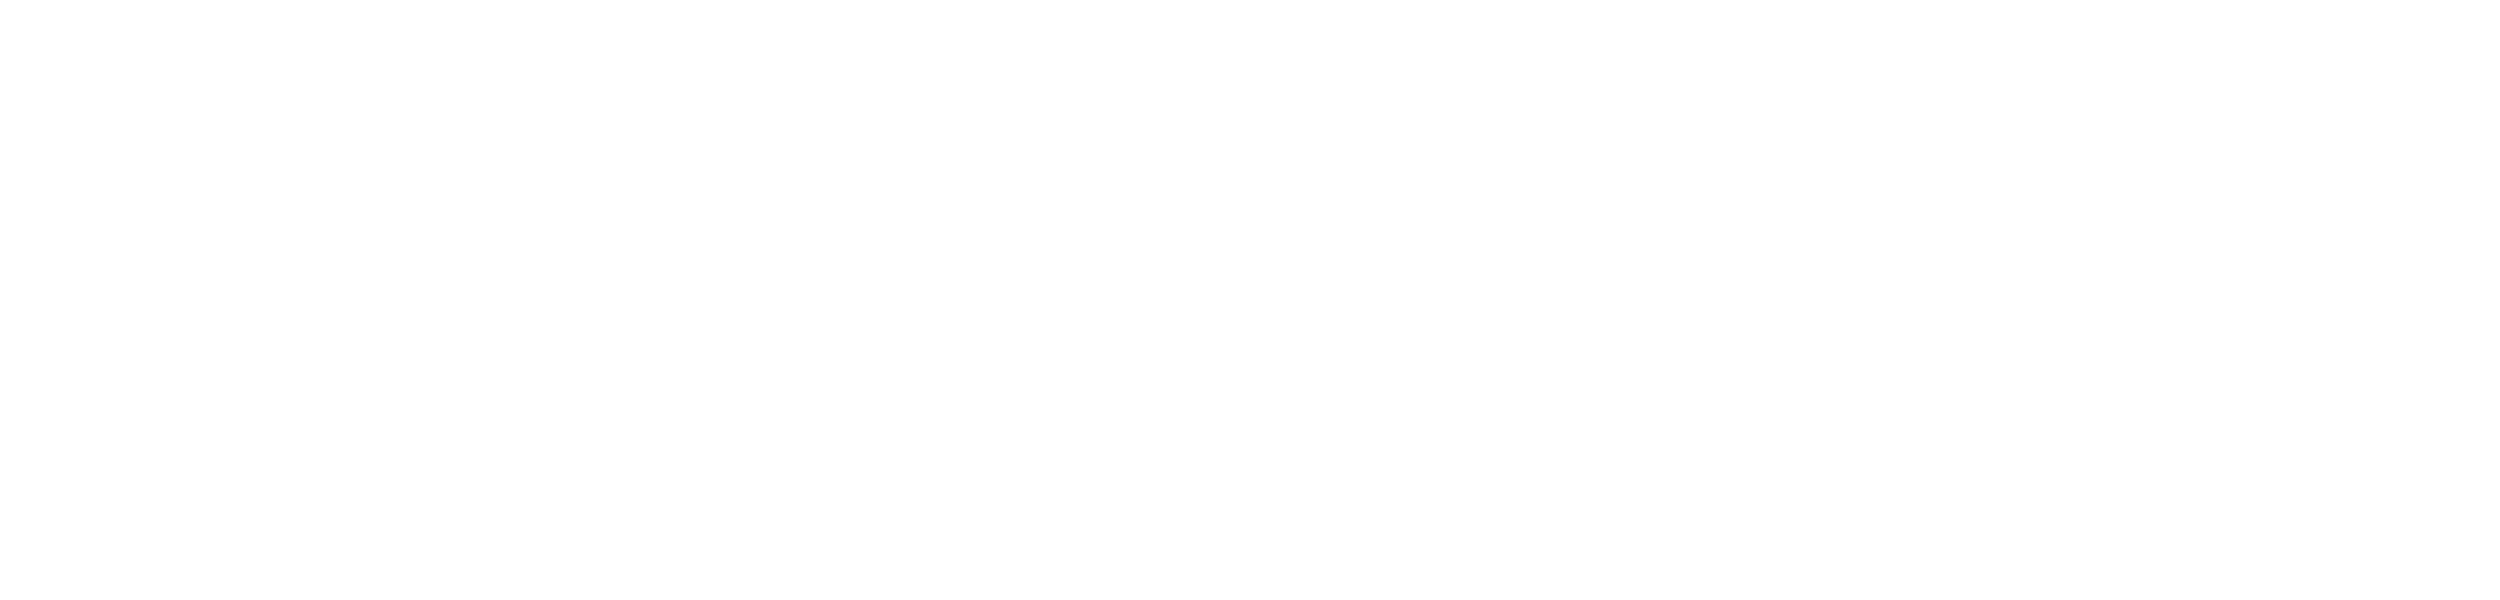 Jim Sweeney | logo